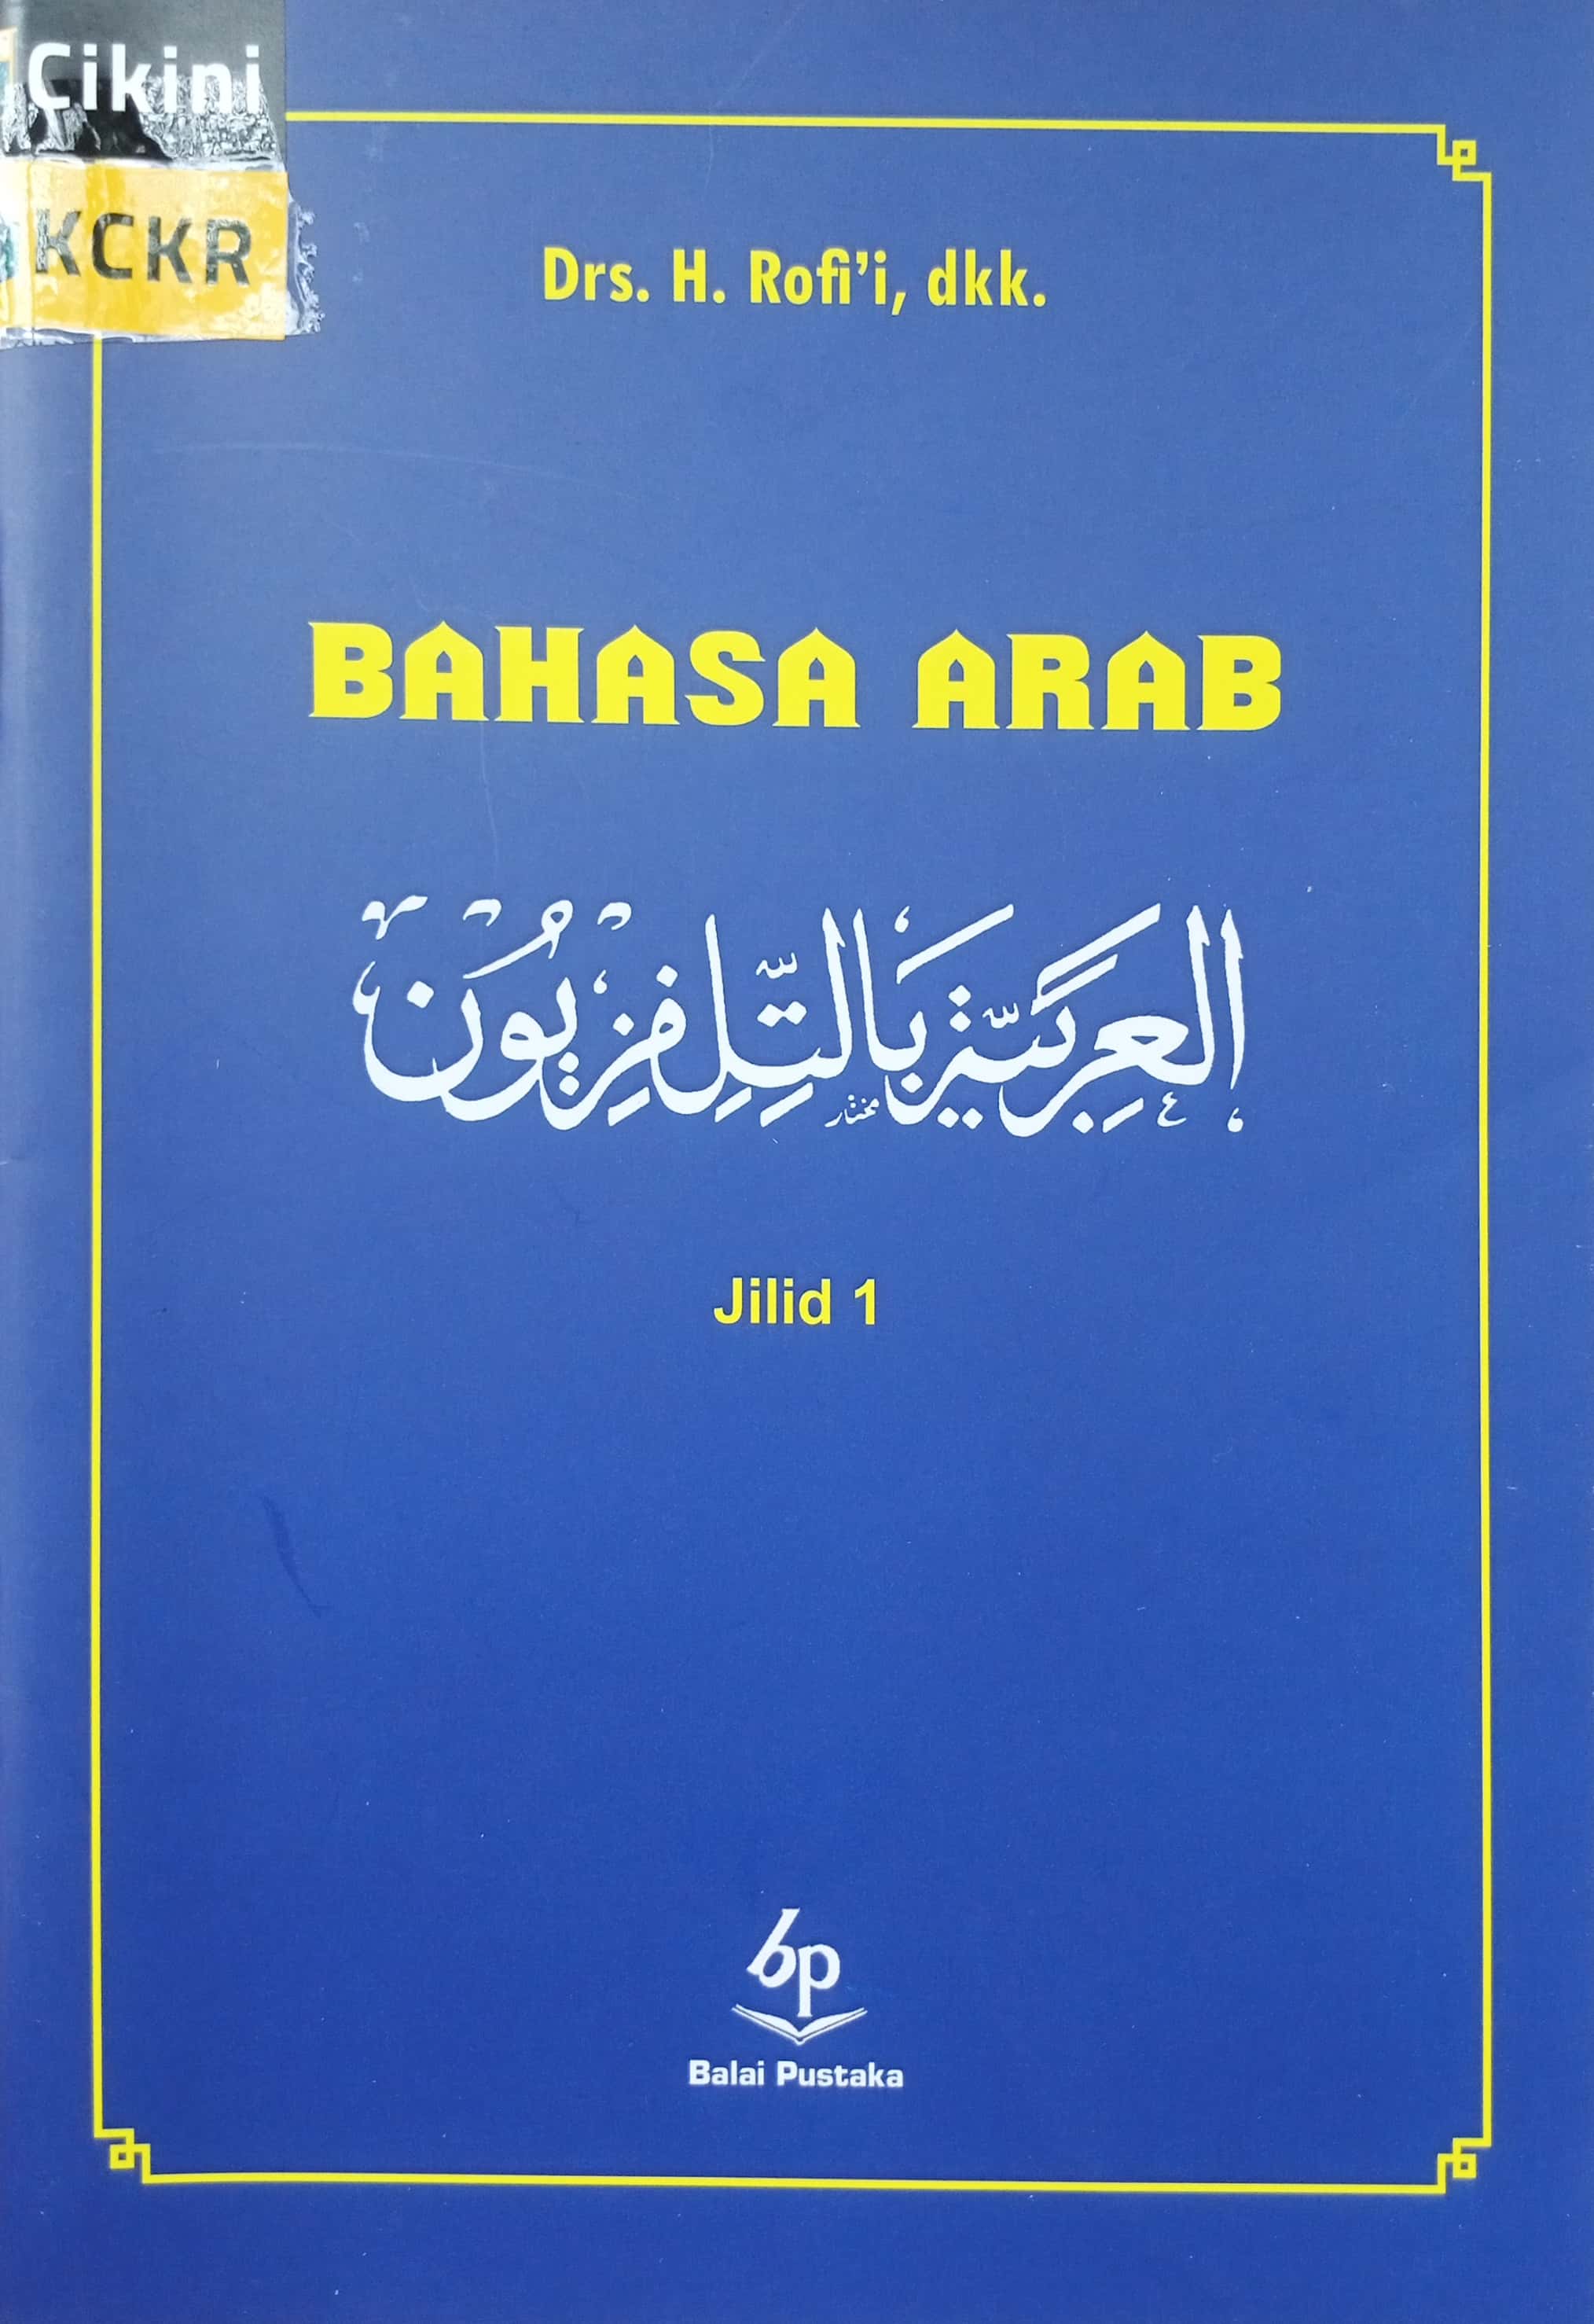 Bahasa Arab jilid 1